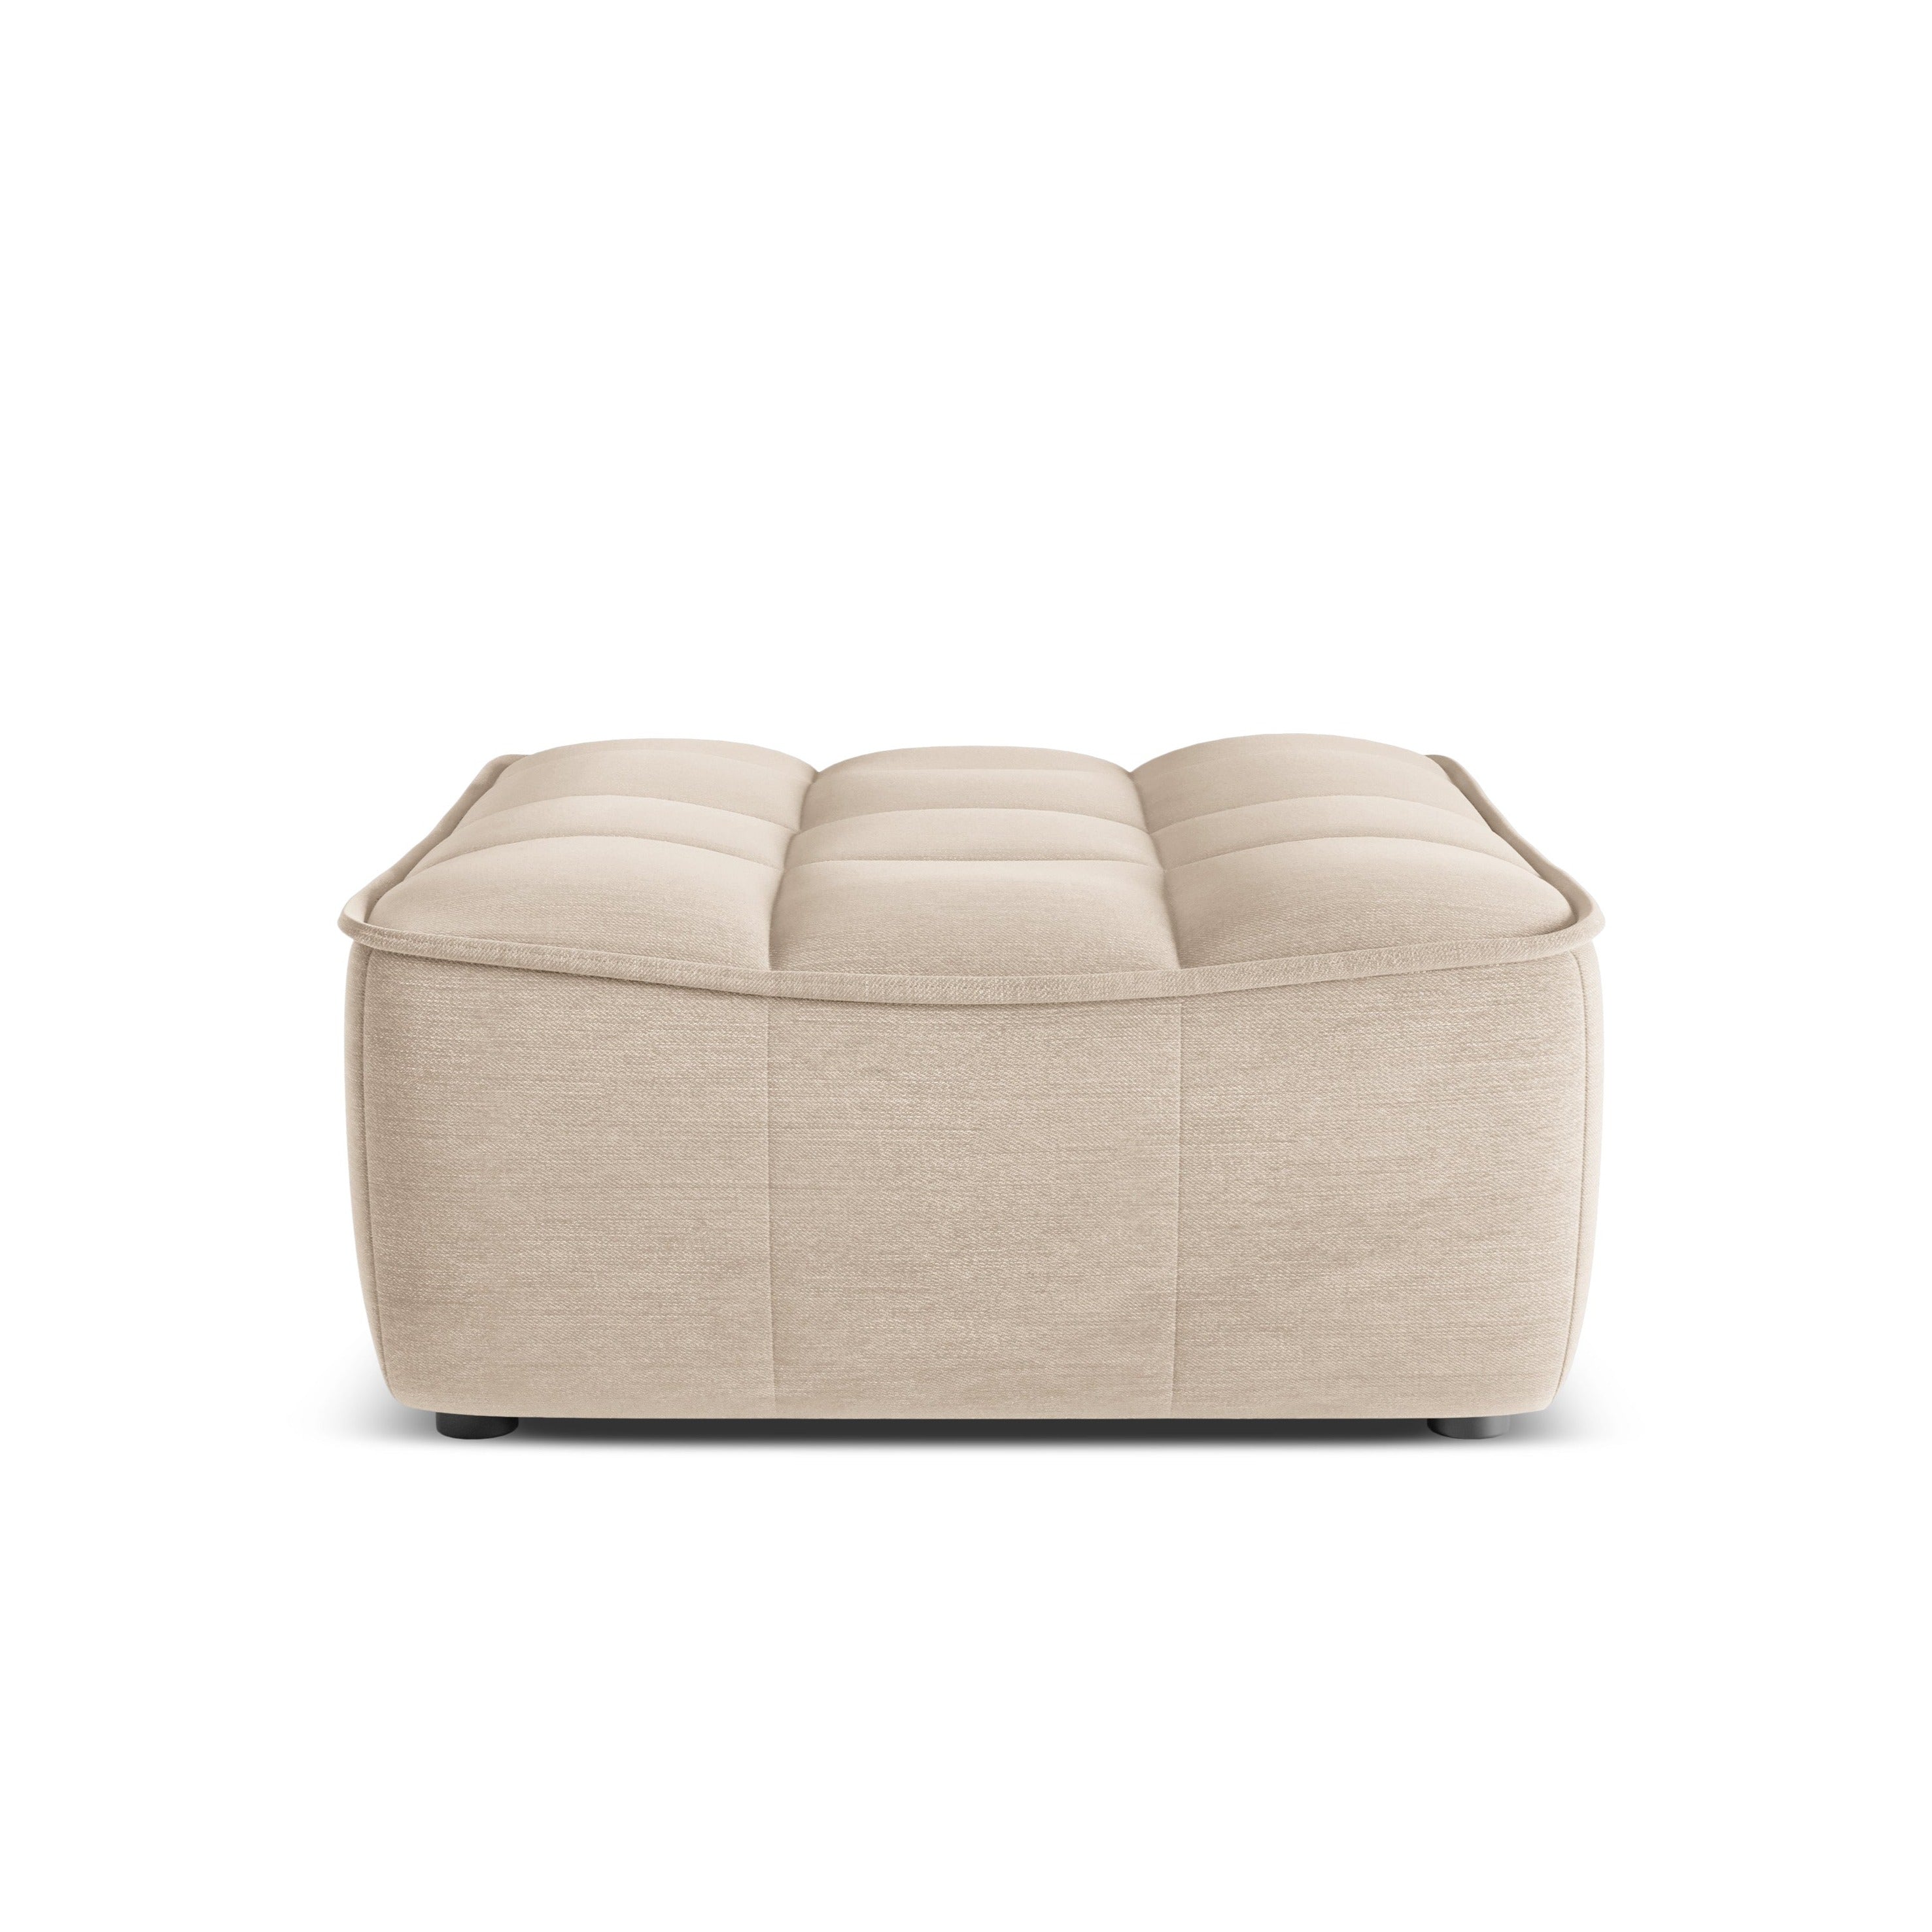 Pouf, "Moni", 1 Seat, 90x83x45
Made in Europe, Maison Heritage, Eye on Design